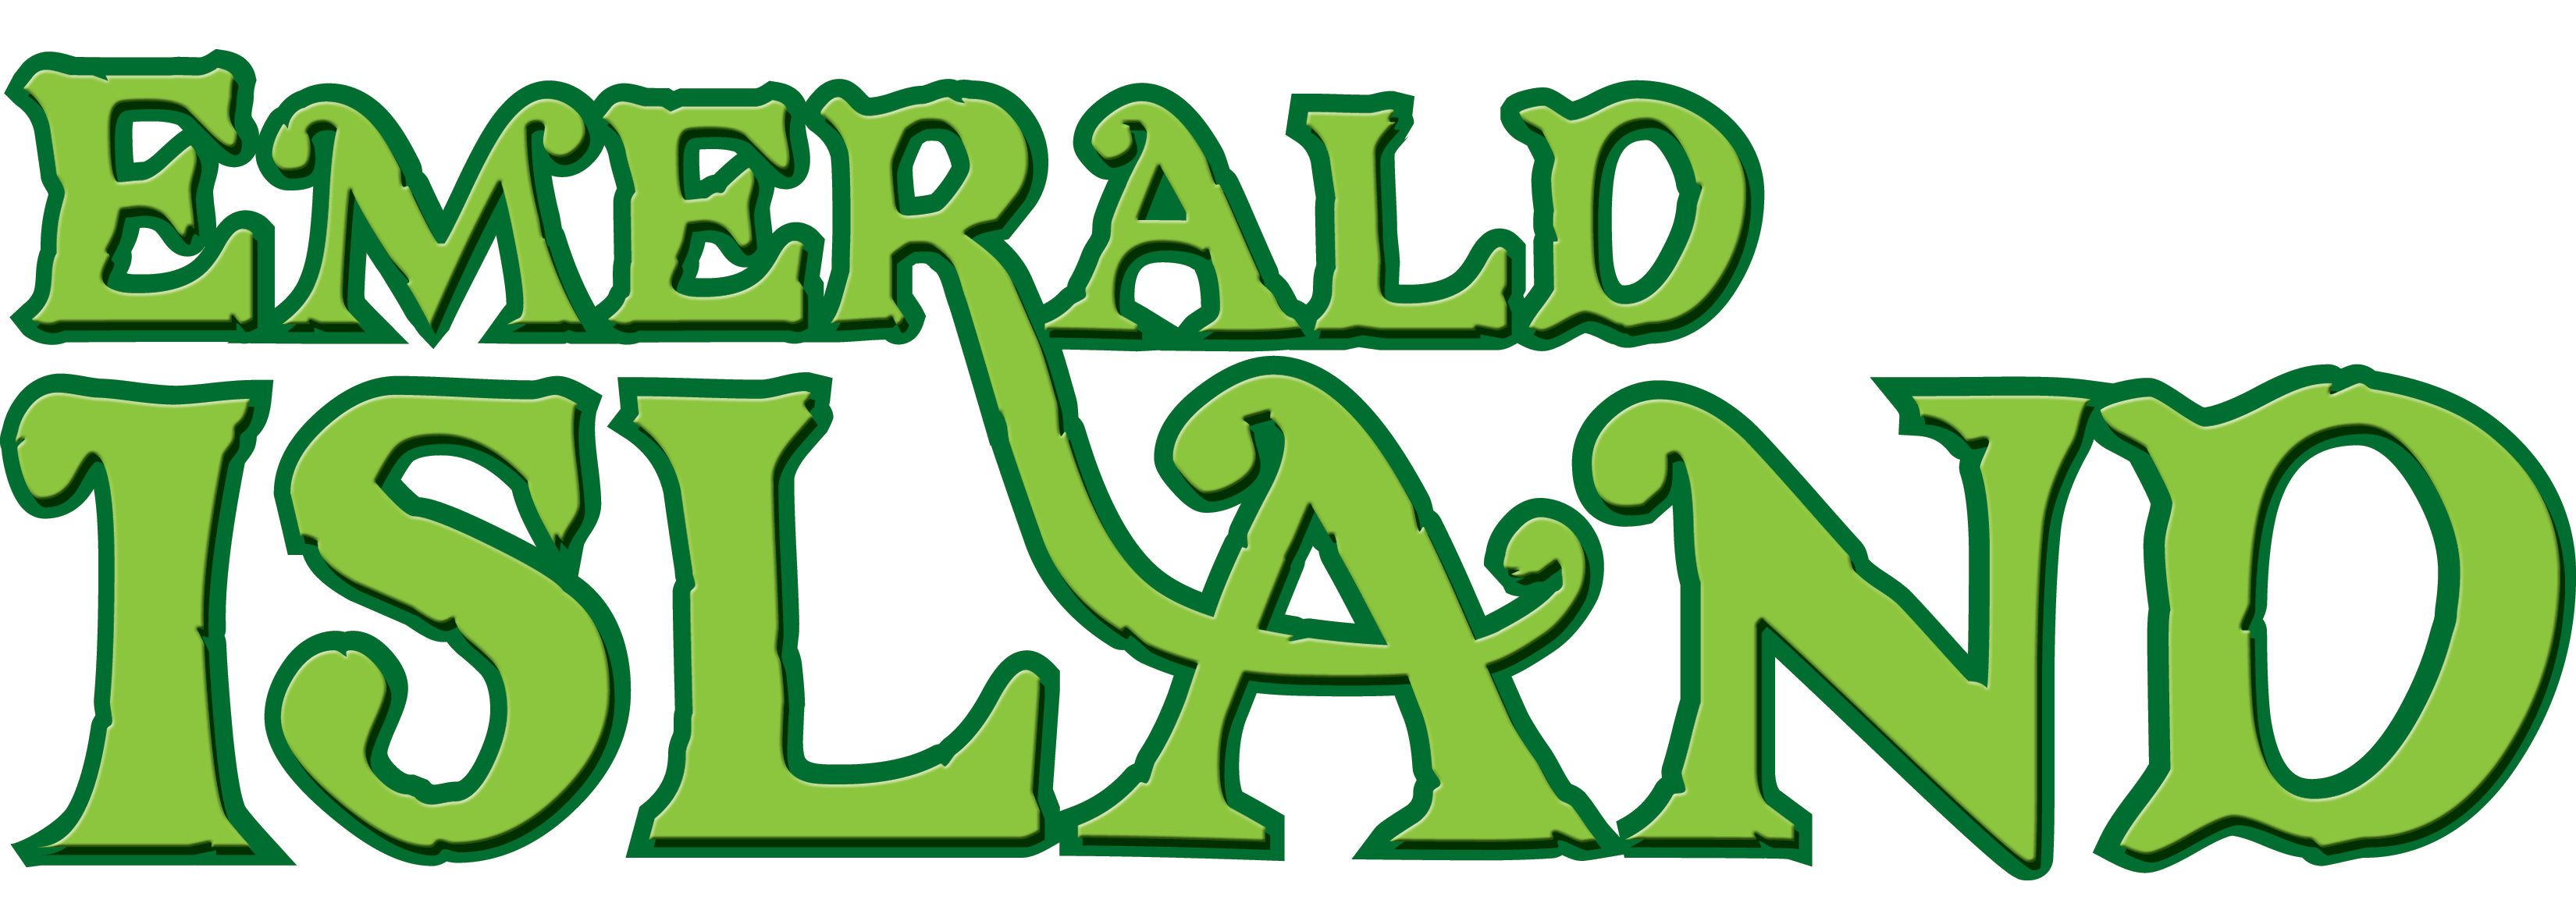 Emerald-Island-Logo.png